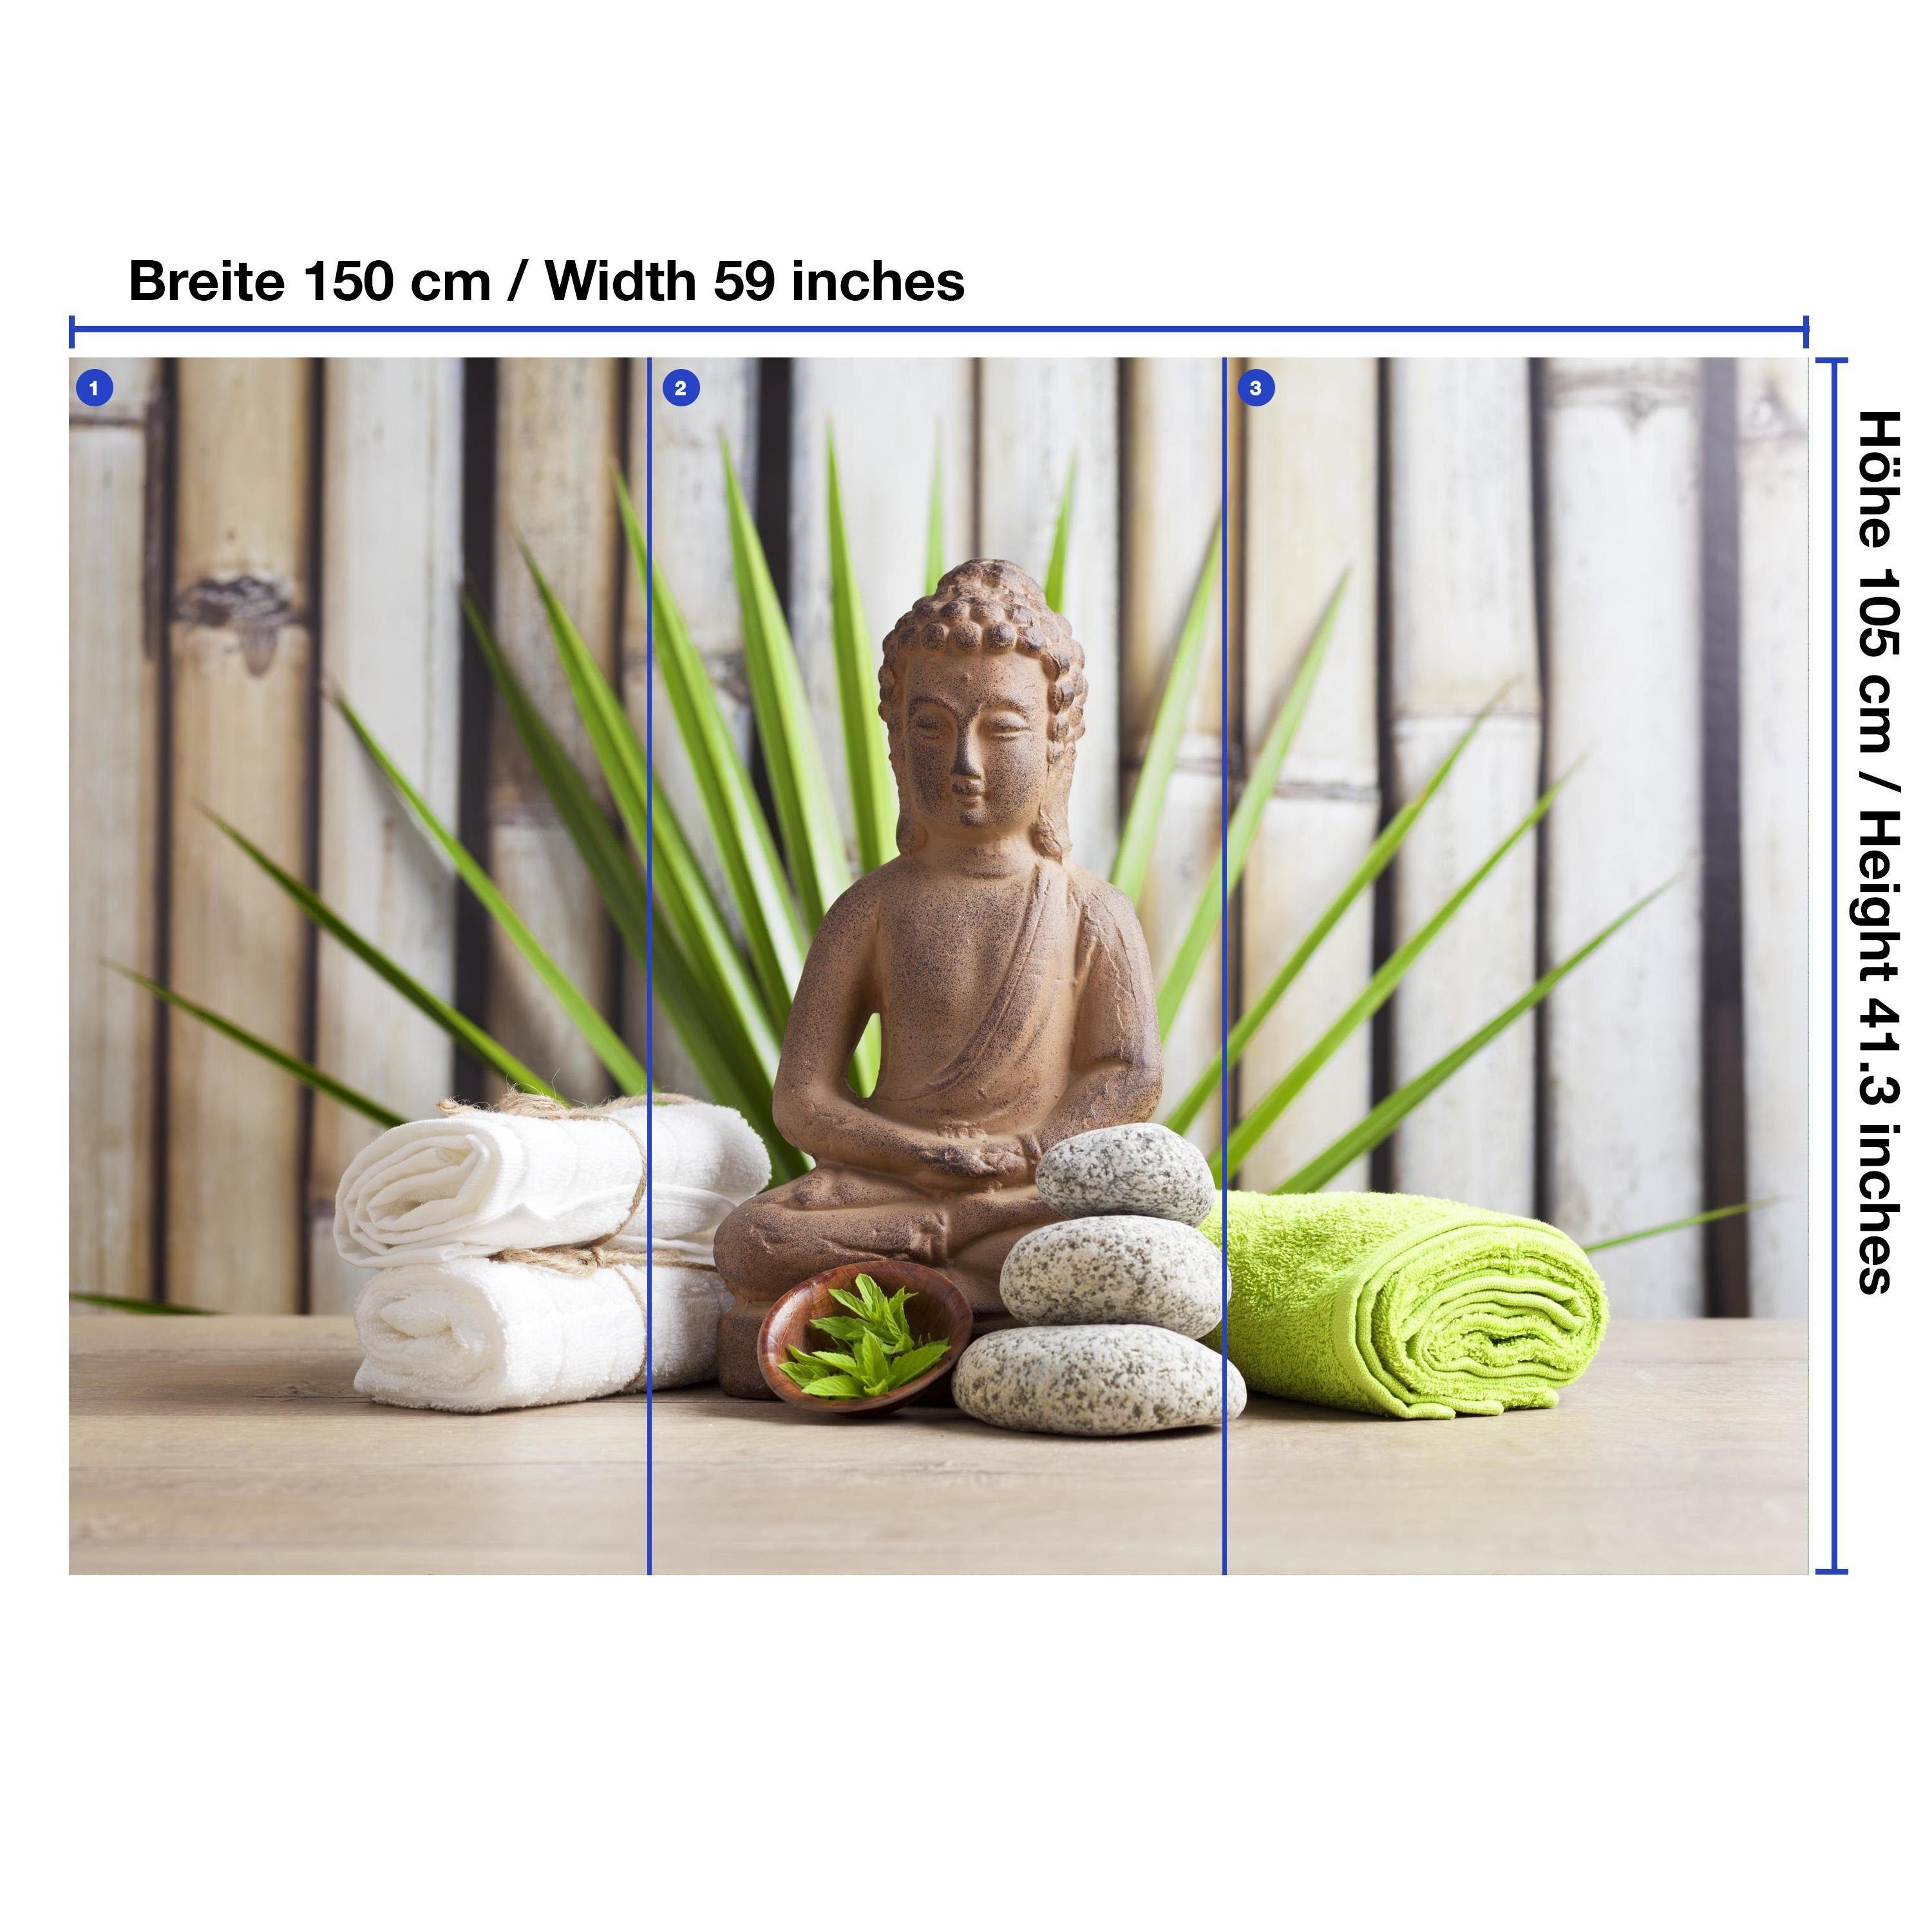 Fototapete wandmotiv24 Wandtapete, Vliestapete und Buddha sauna, glatt, matt, Motivtapete,